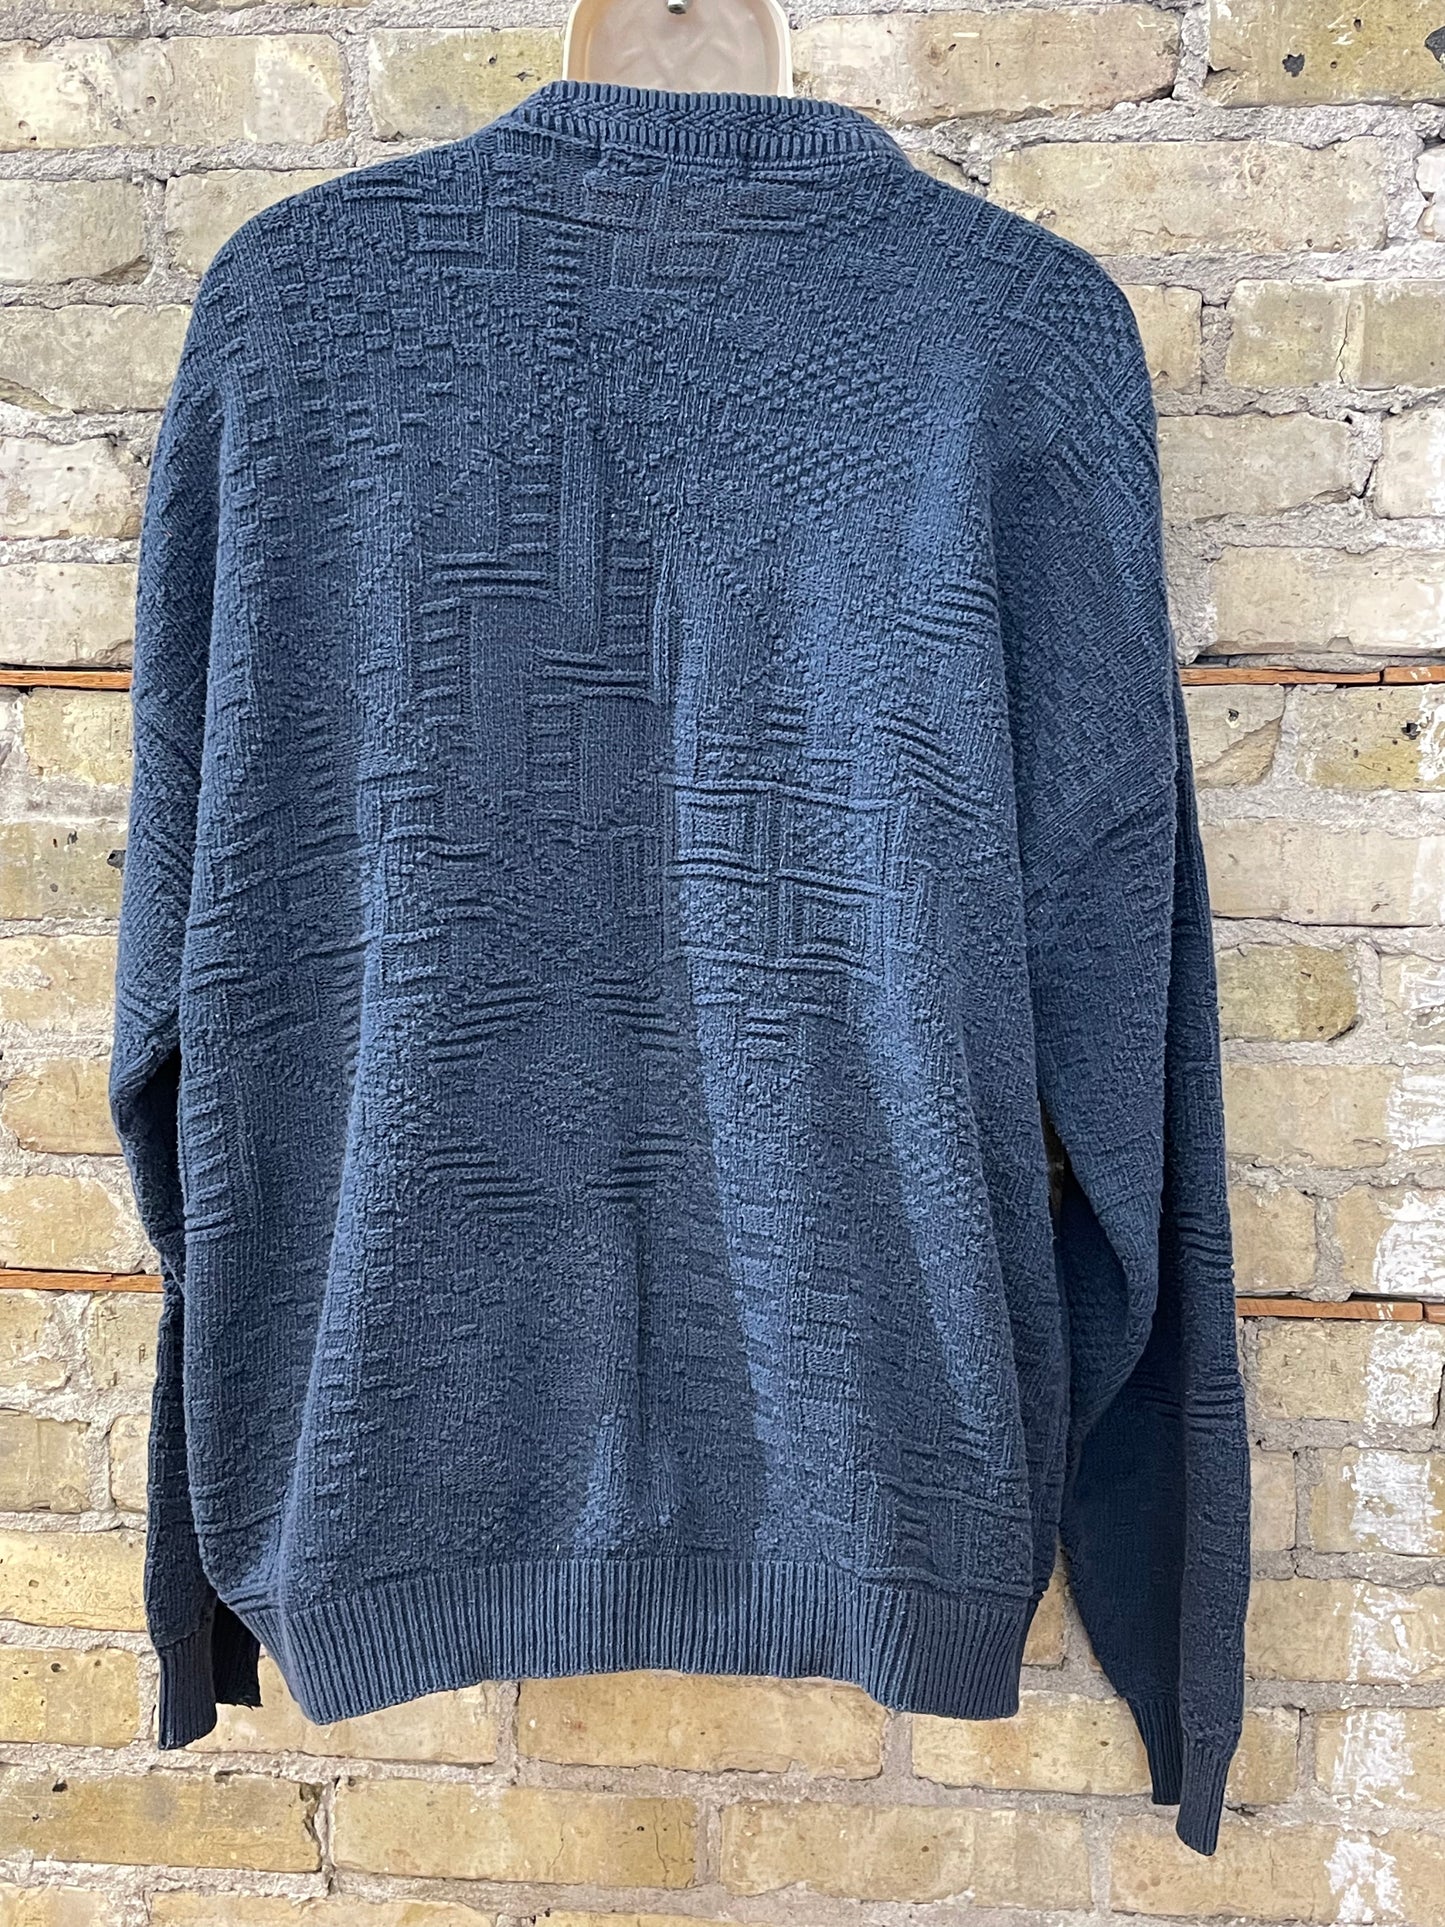 John Weitz Navy Blue 80s Sweater